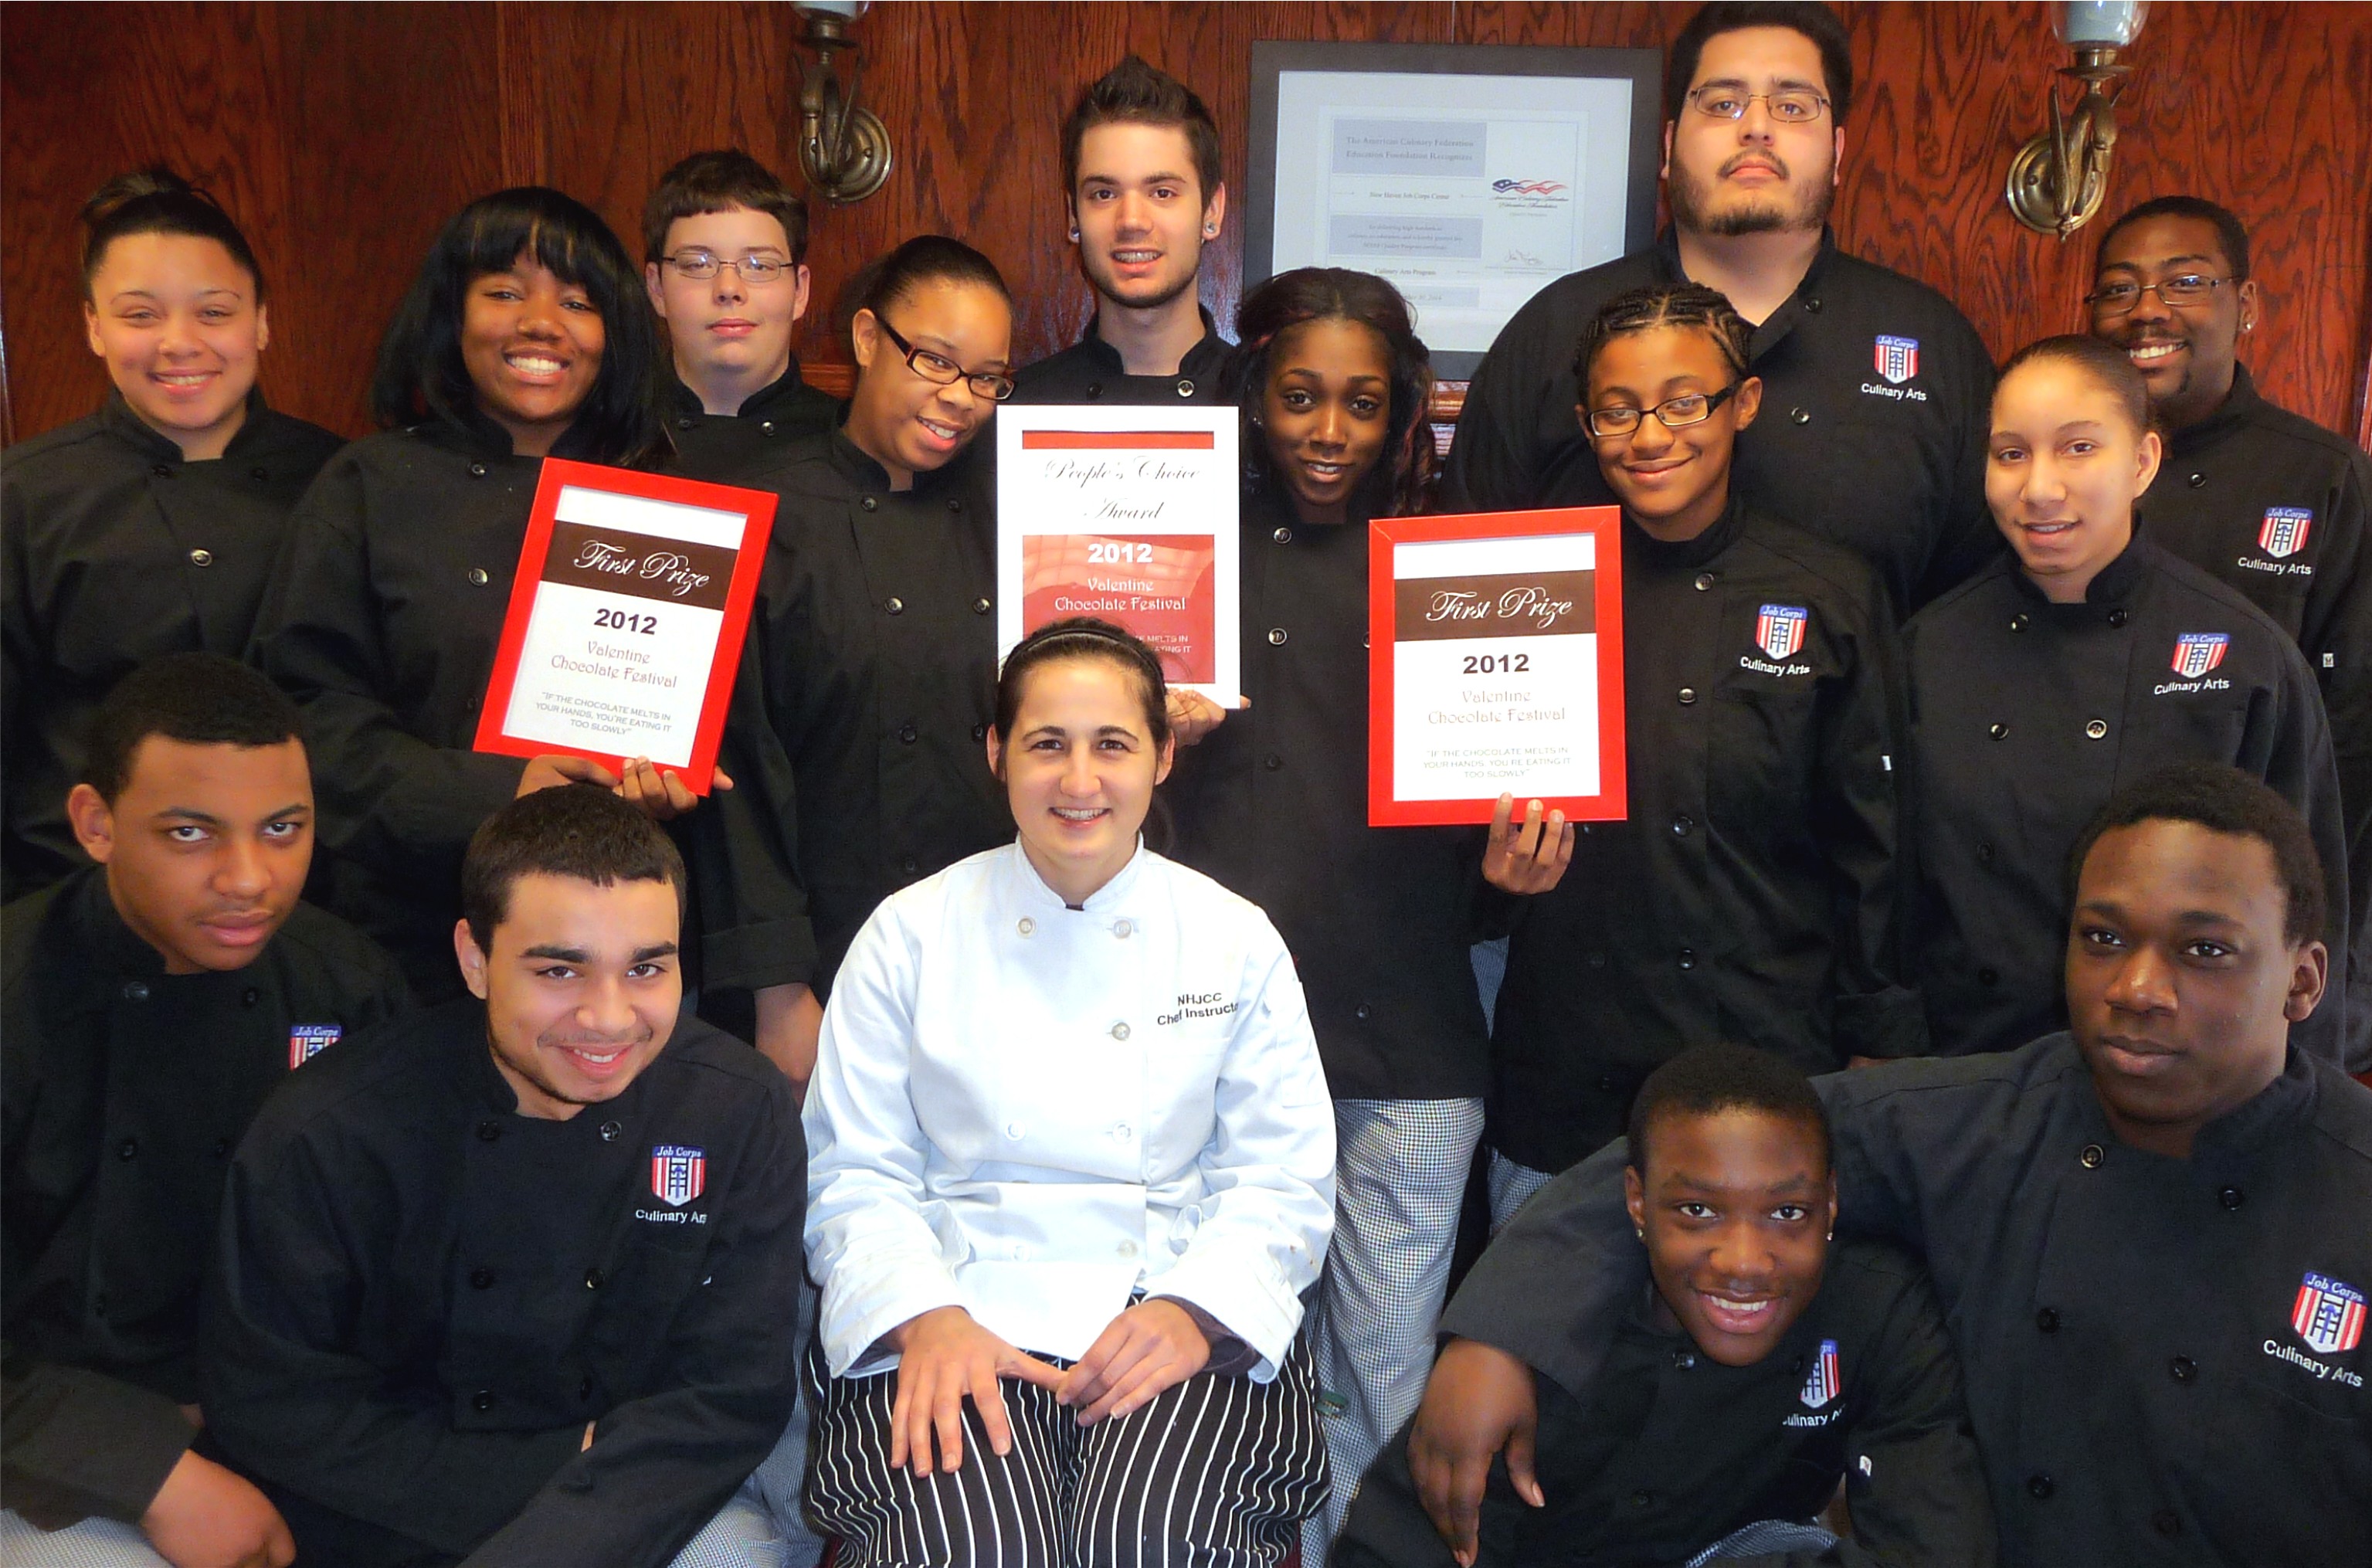 All award winning culinary students